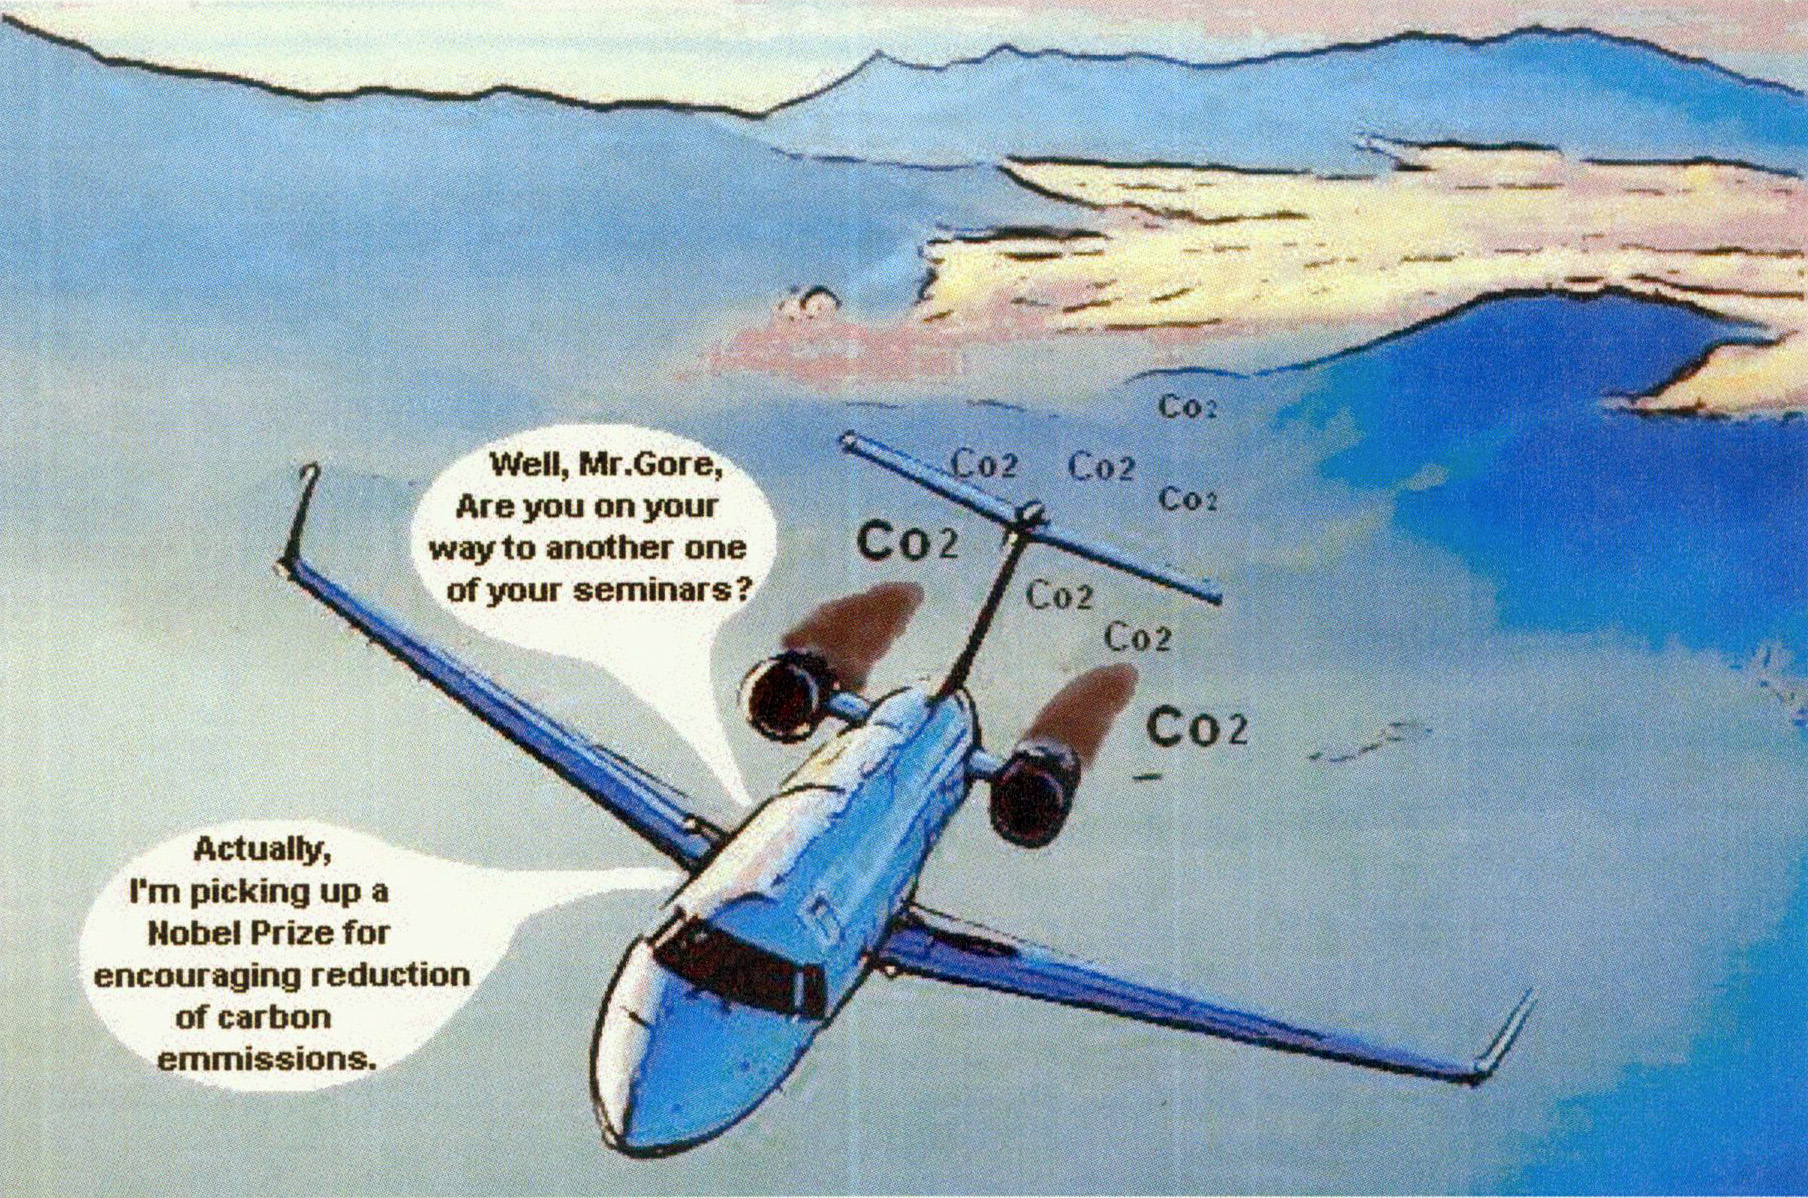 cool aircraft and funny cartoon image - Mod DB